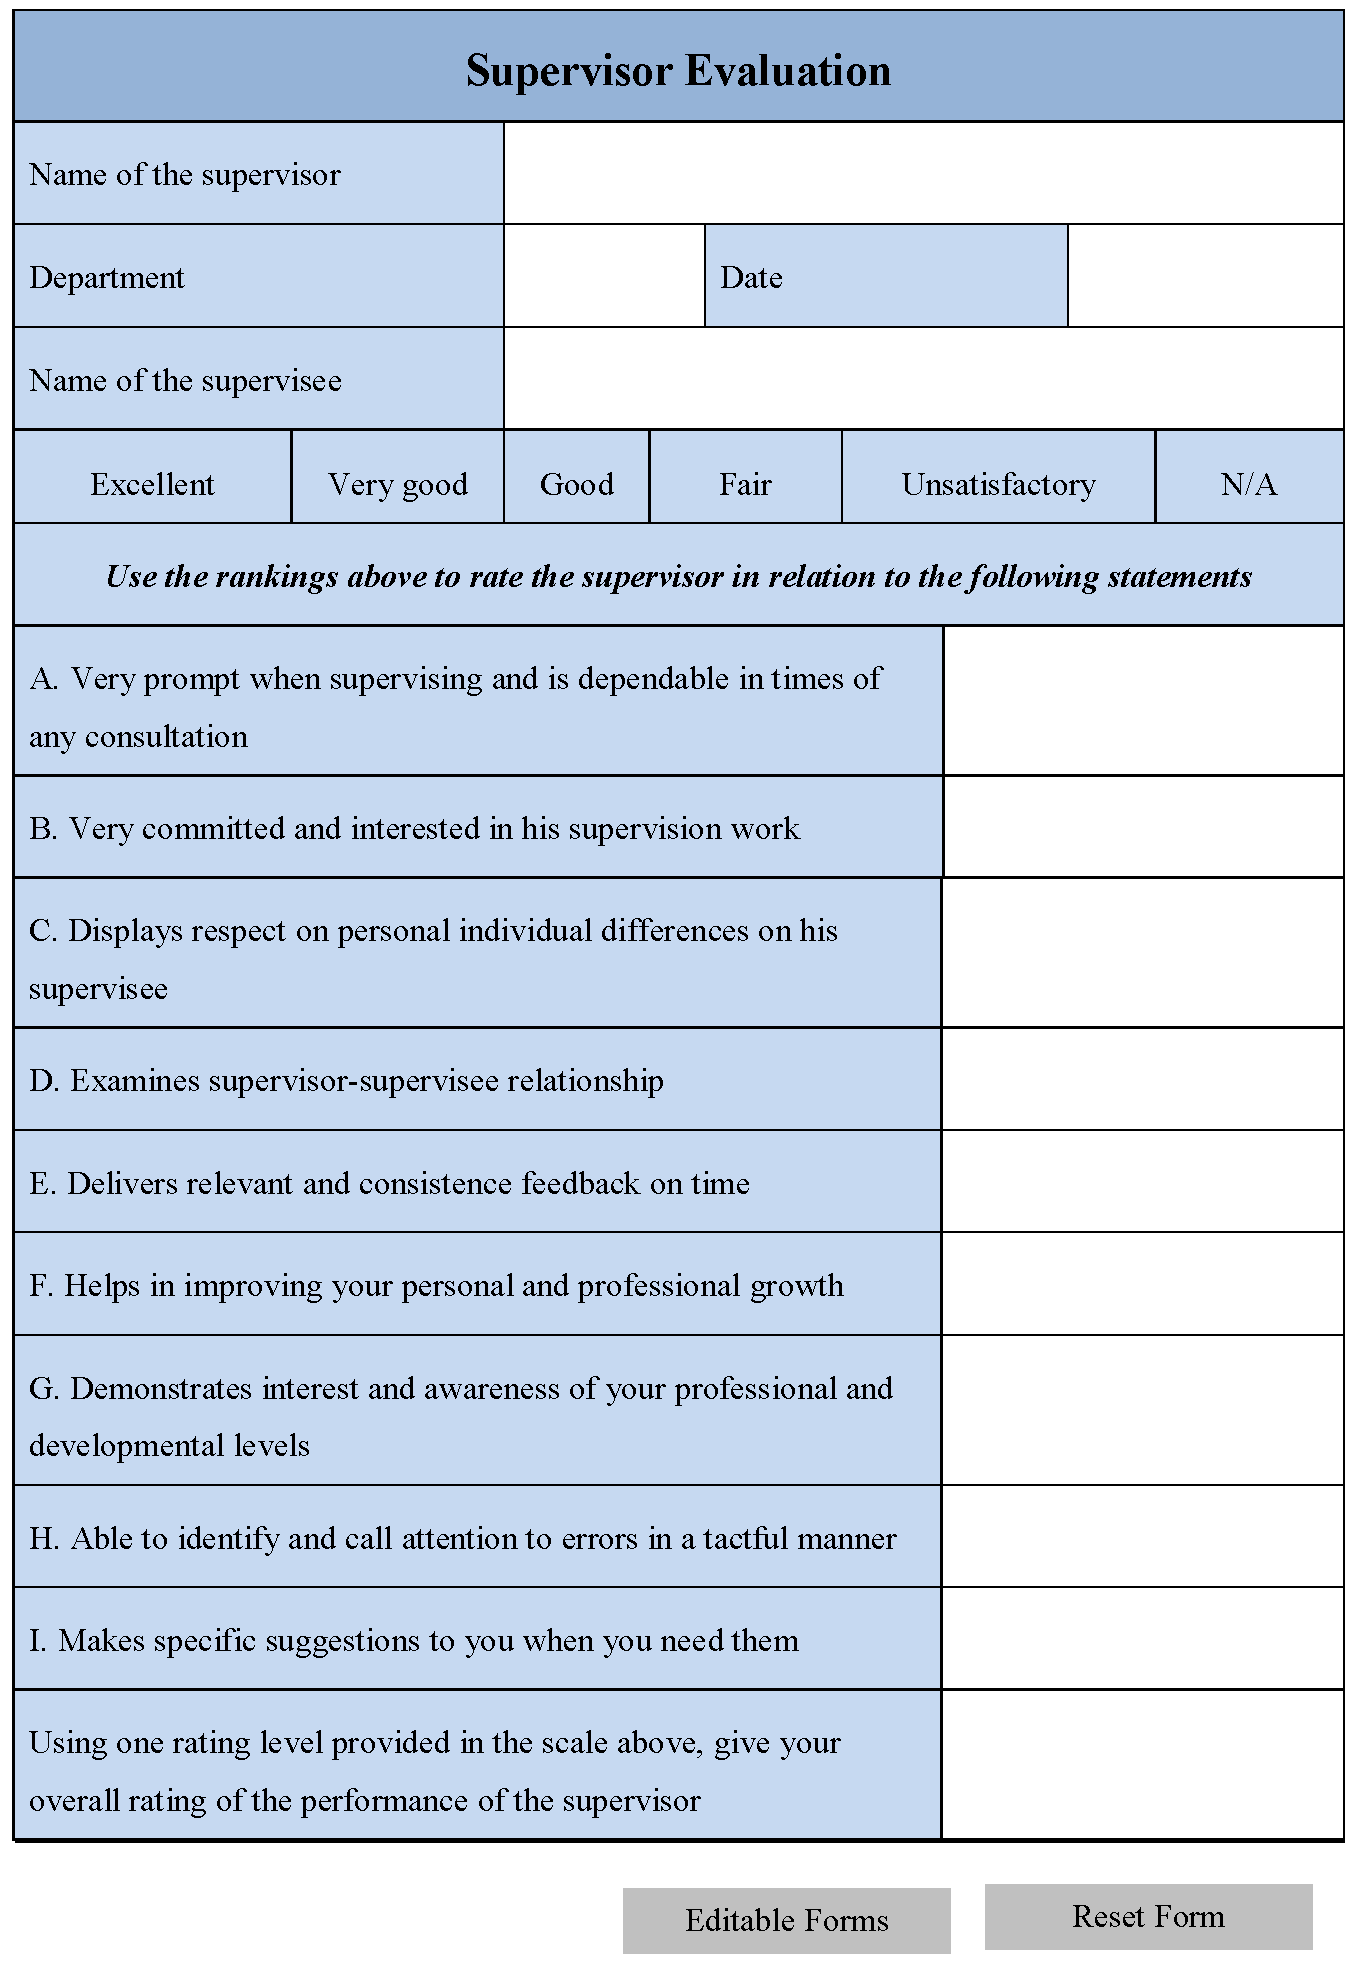 Supervisor Evaluation Form Editable Forms